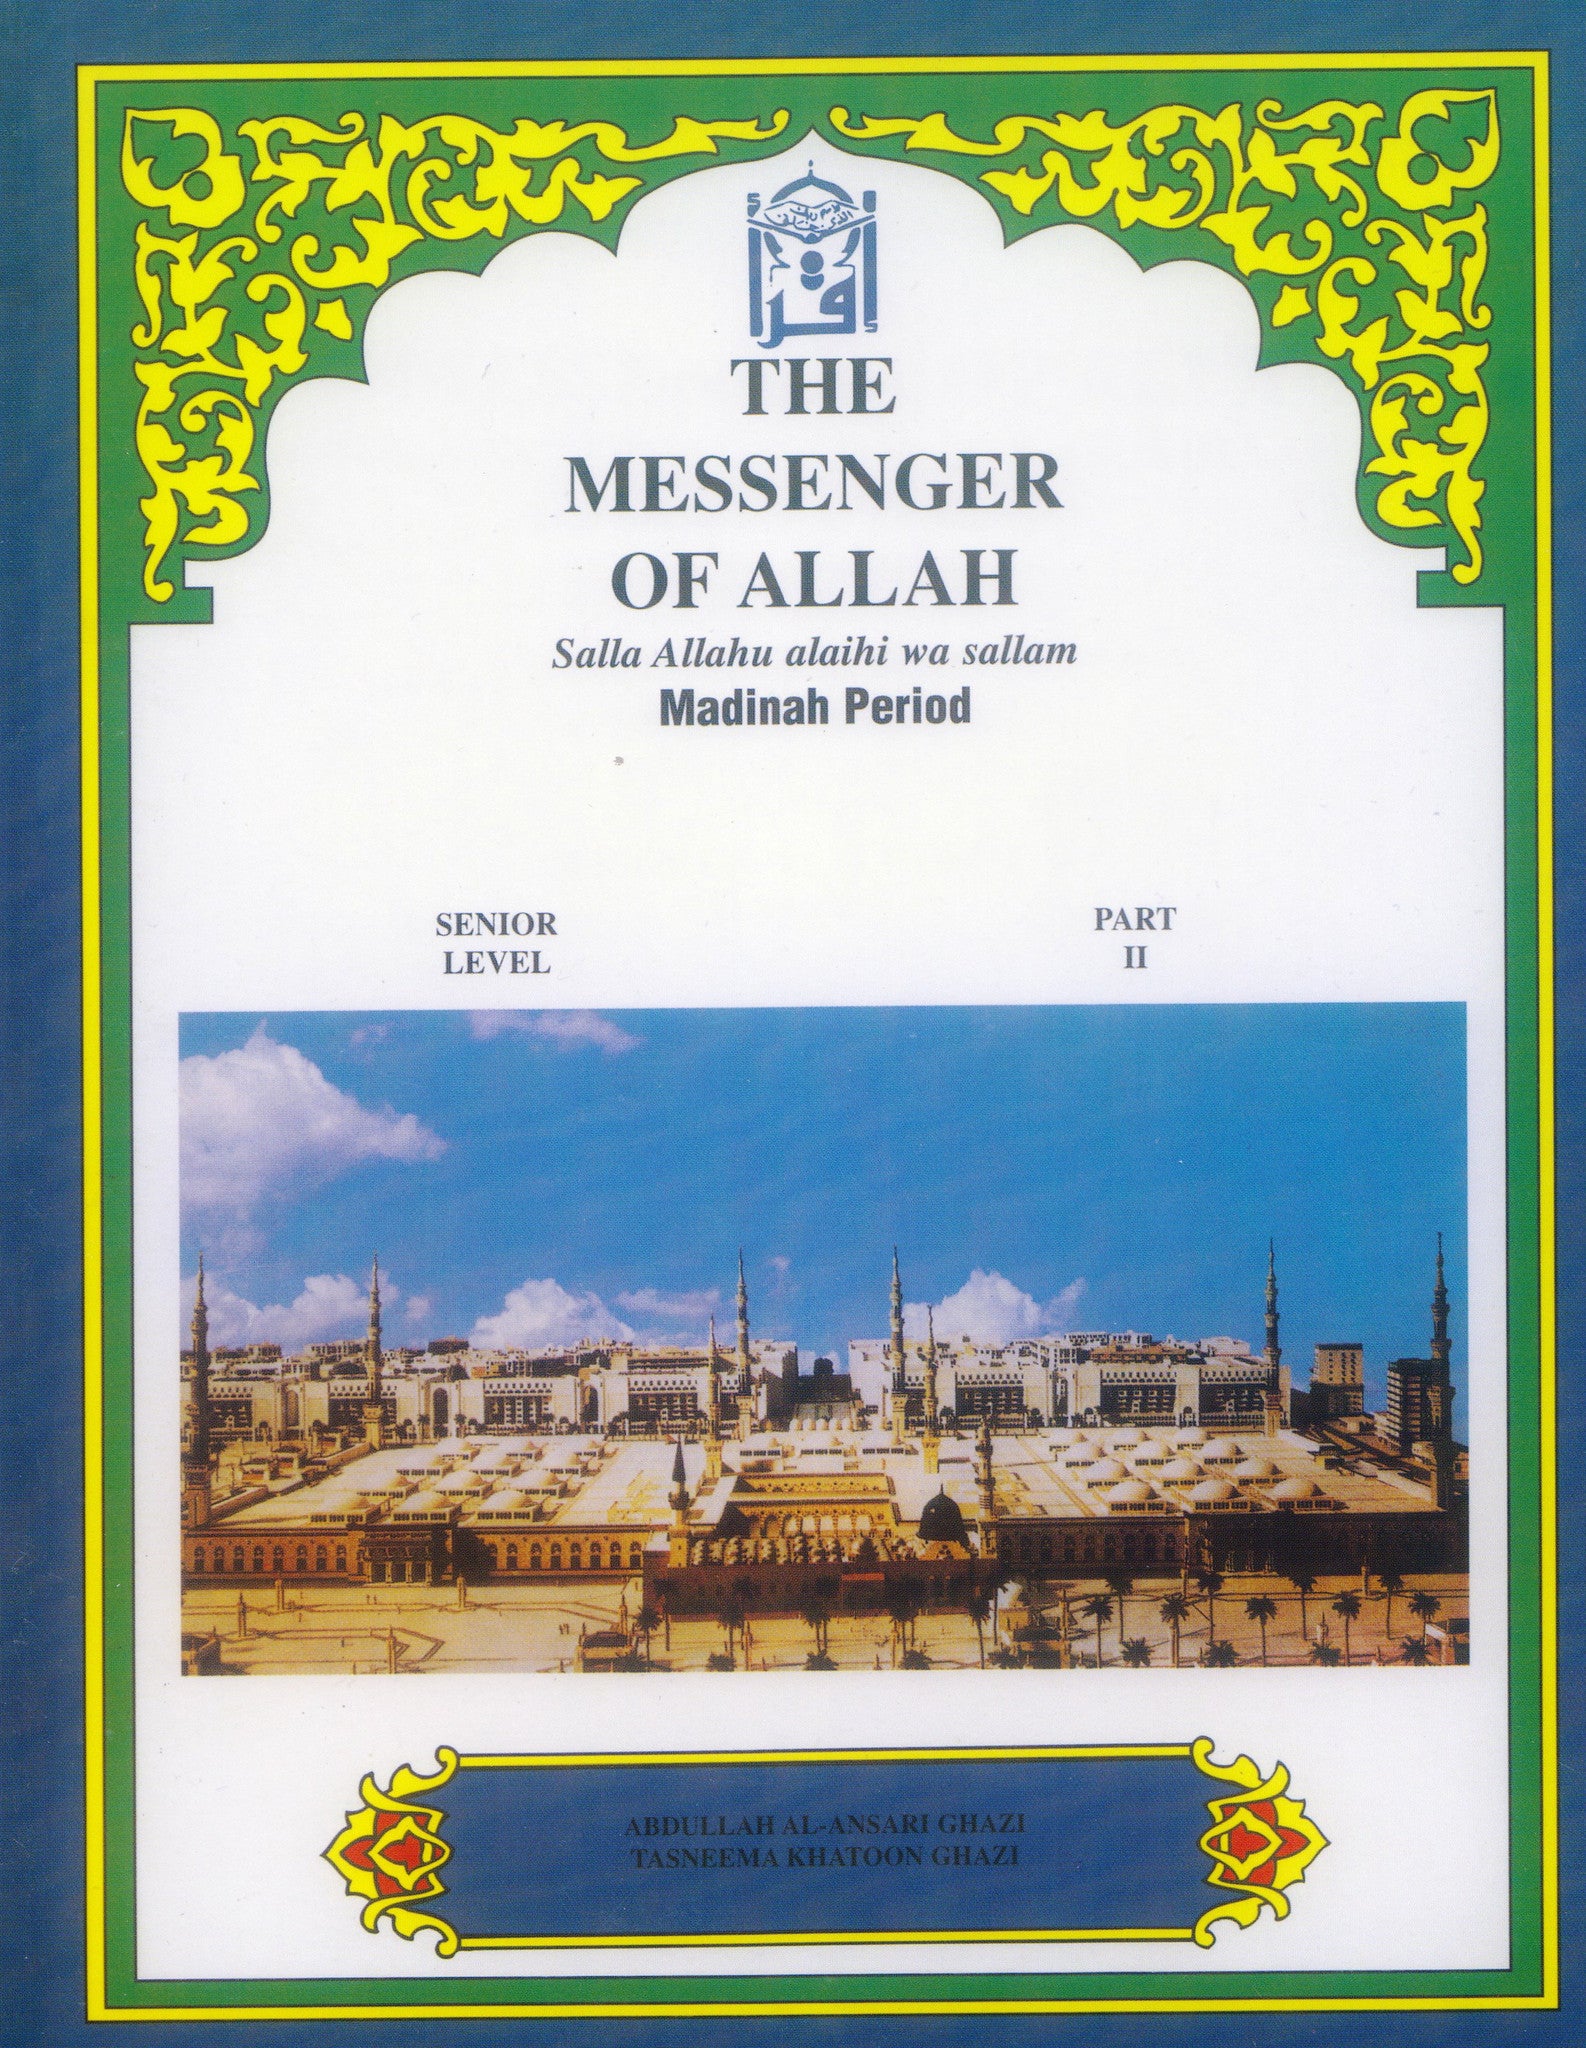 The Messenger of Allah Madina Period Textbook - 8th Grade